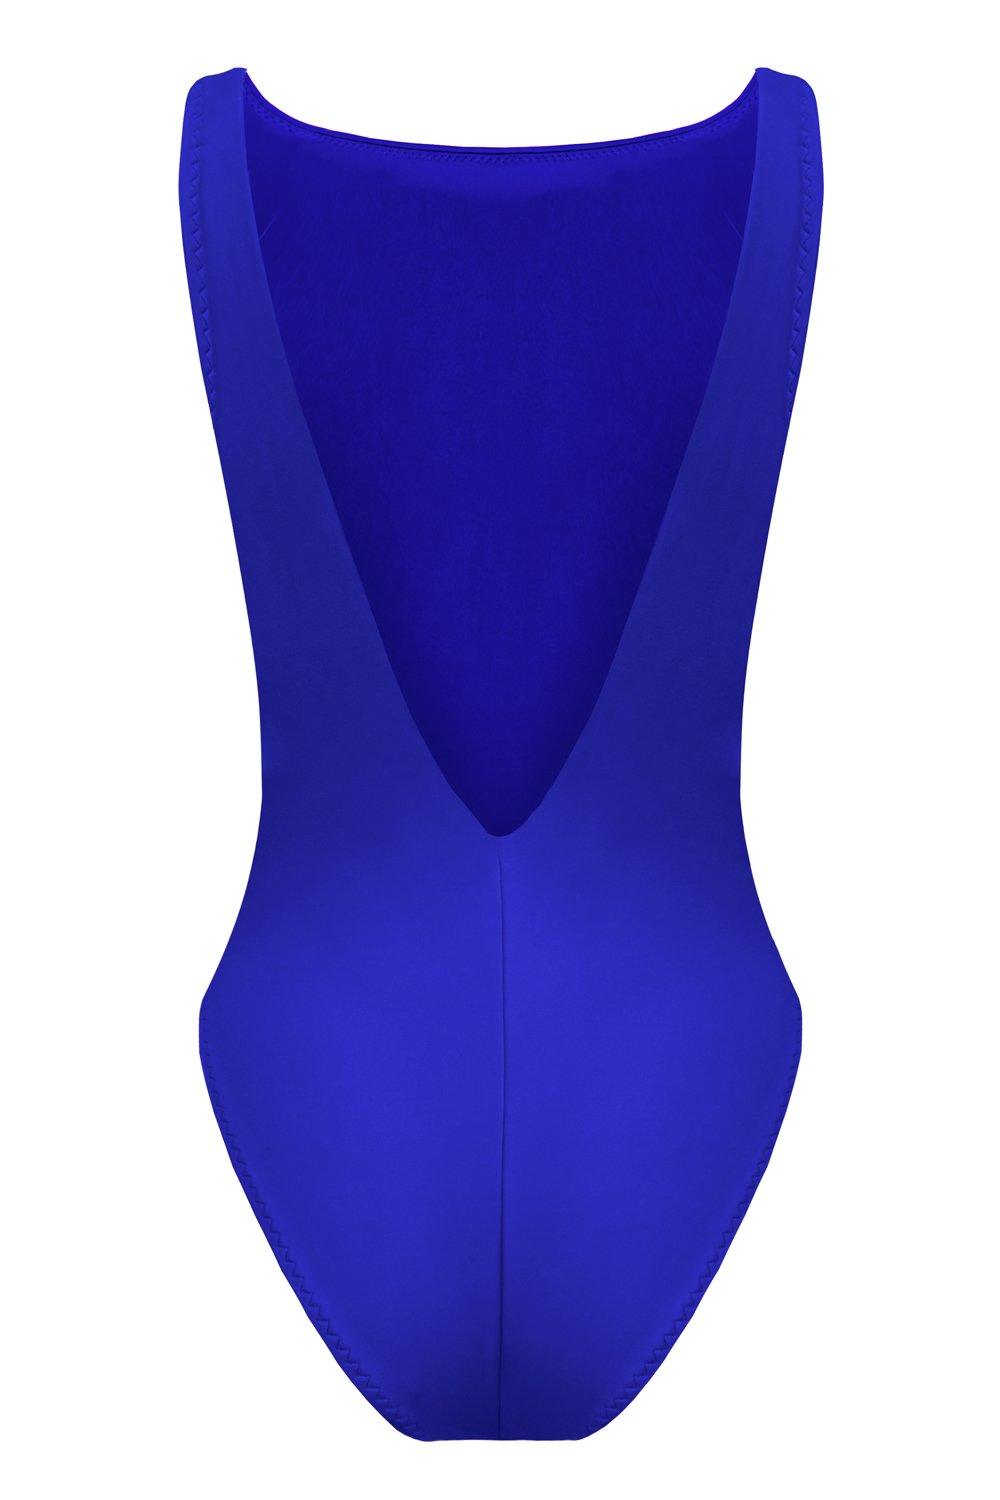 Vertex Electric swimsuit - yesUndress